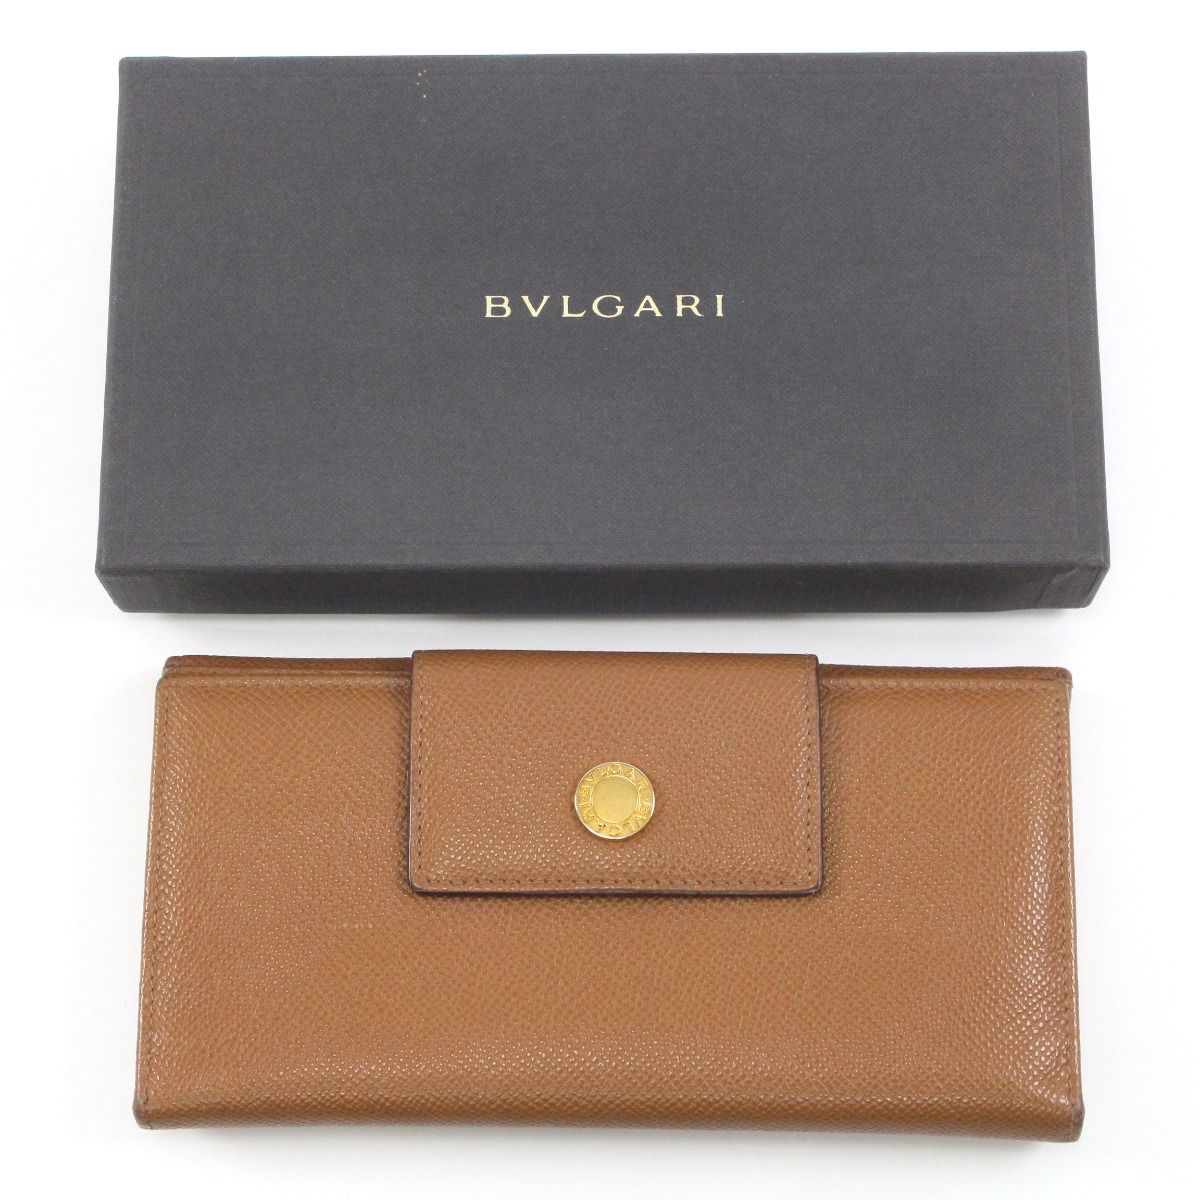 低価日本製【新品未使用】ブルガリ BVLGARI 長財布 【291025】 小物